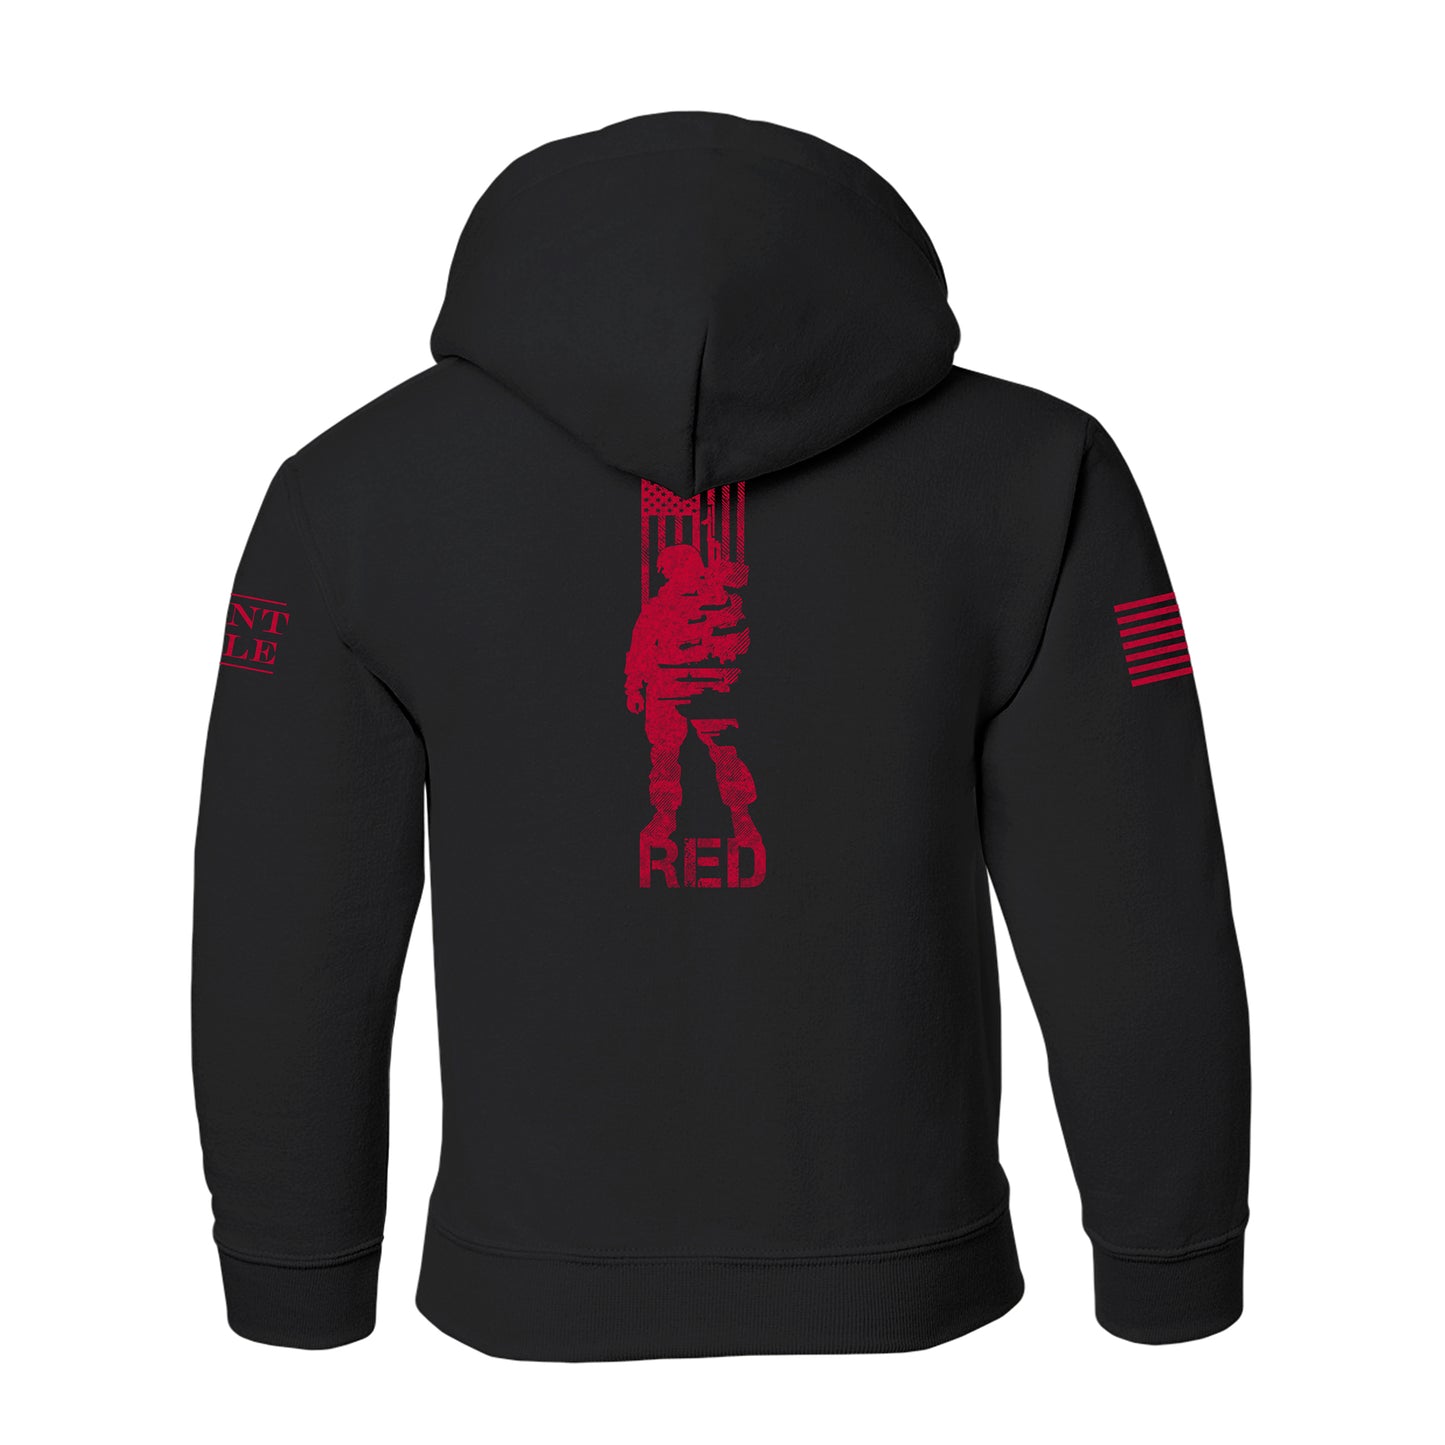 Military Sweatshirt for Kids - RED 